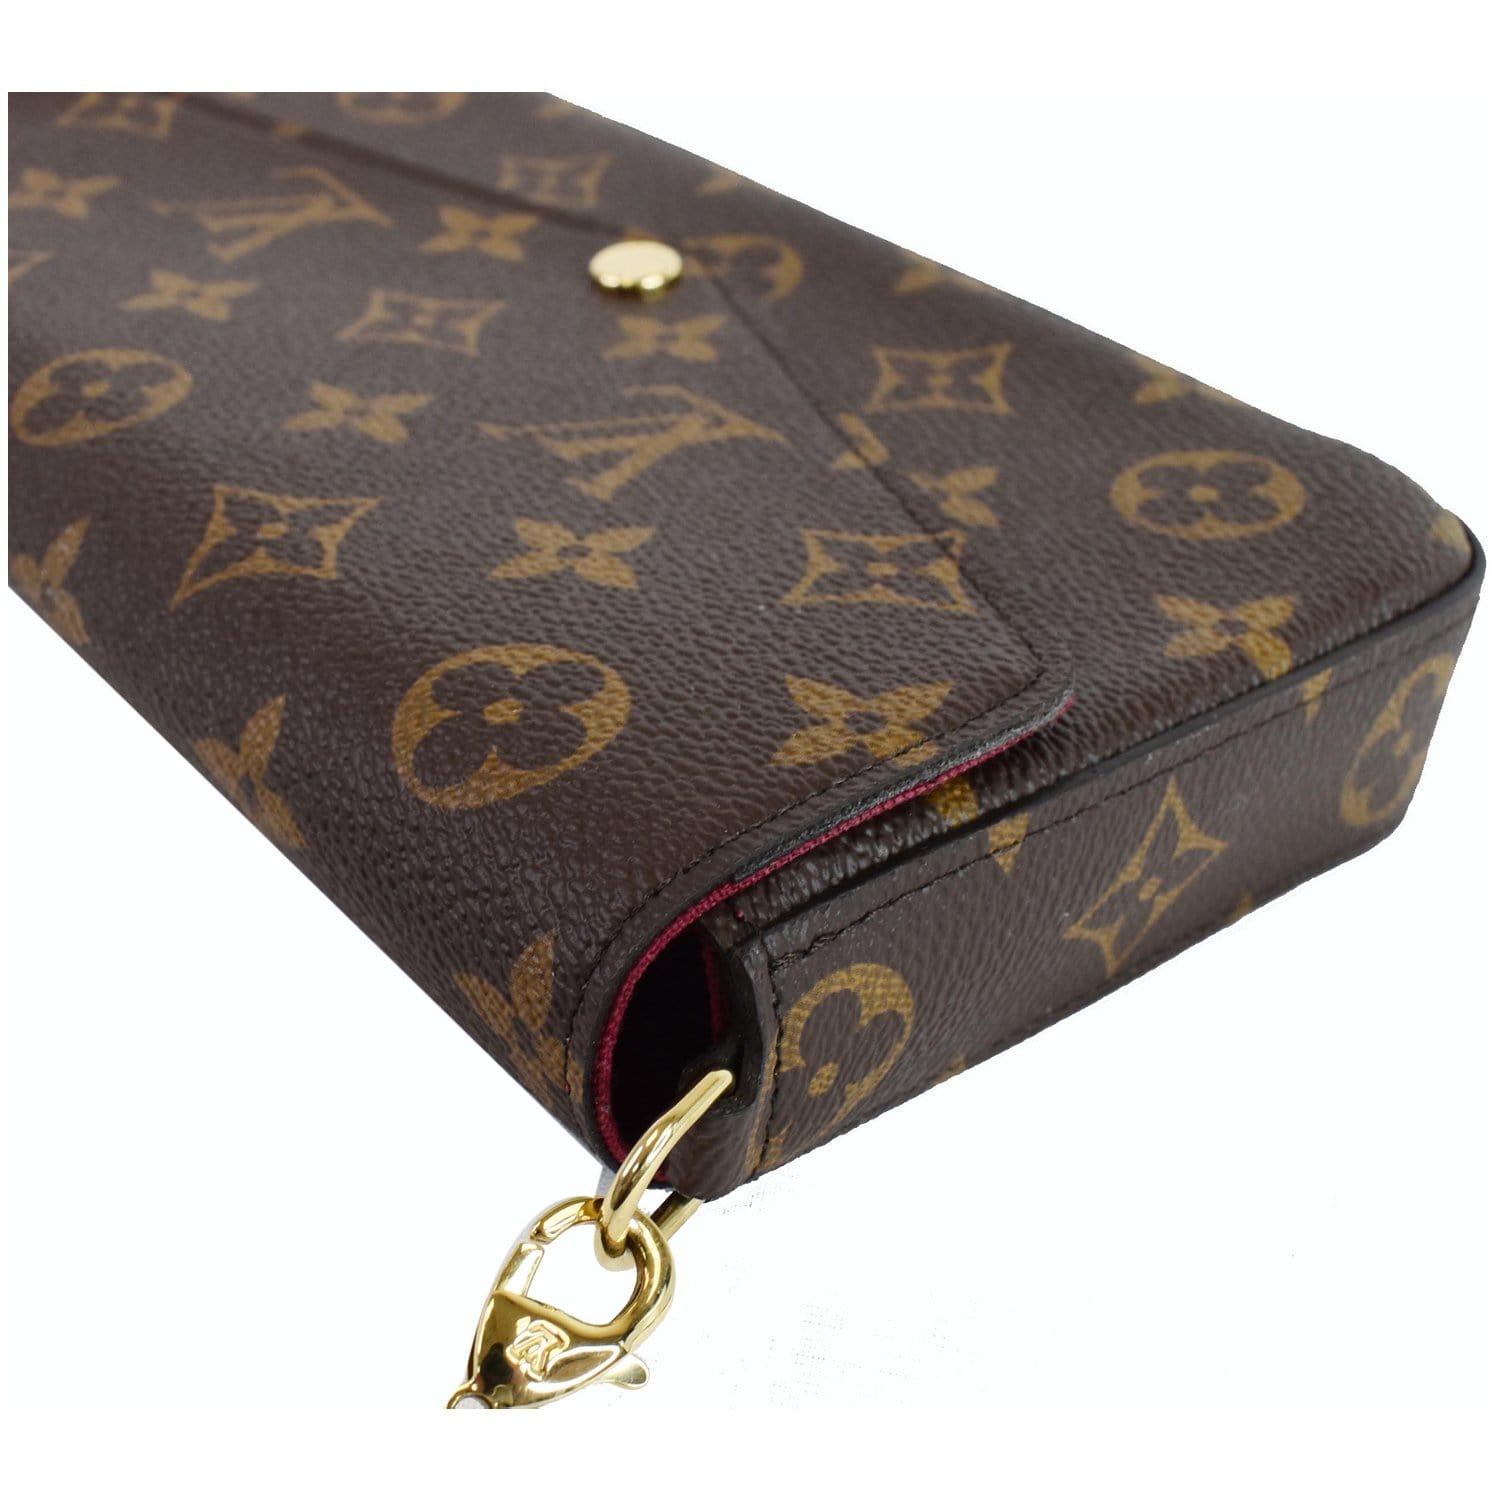 Tas Louis Vuitton Felice Shoulder Bag Brown SP1068